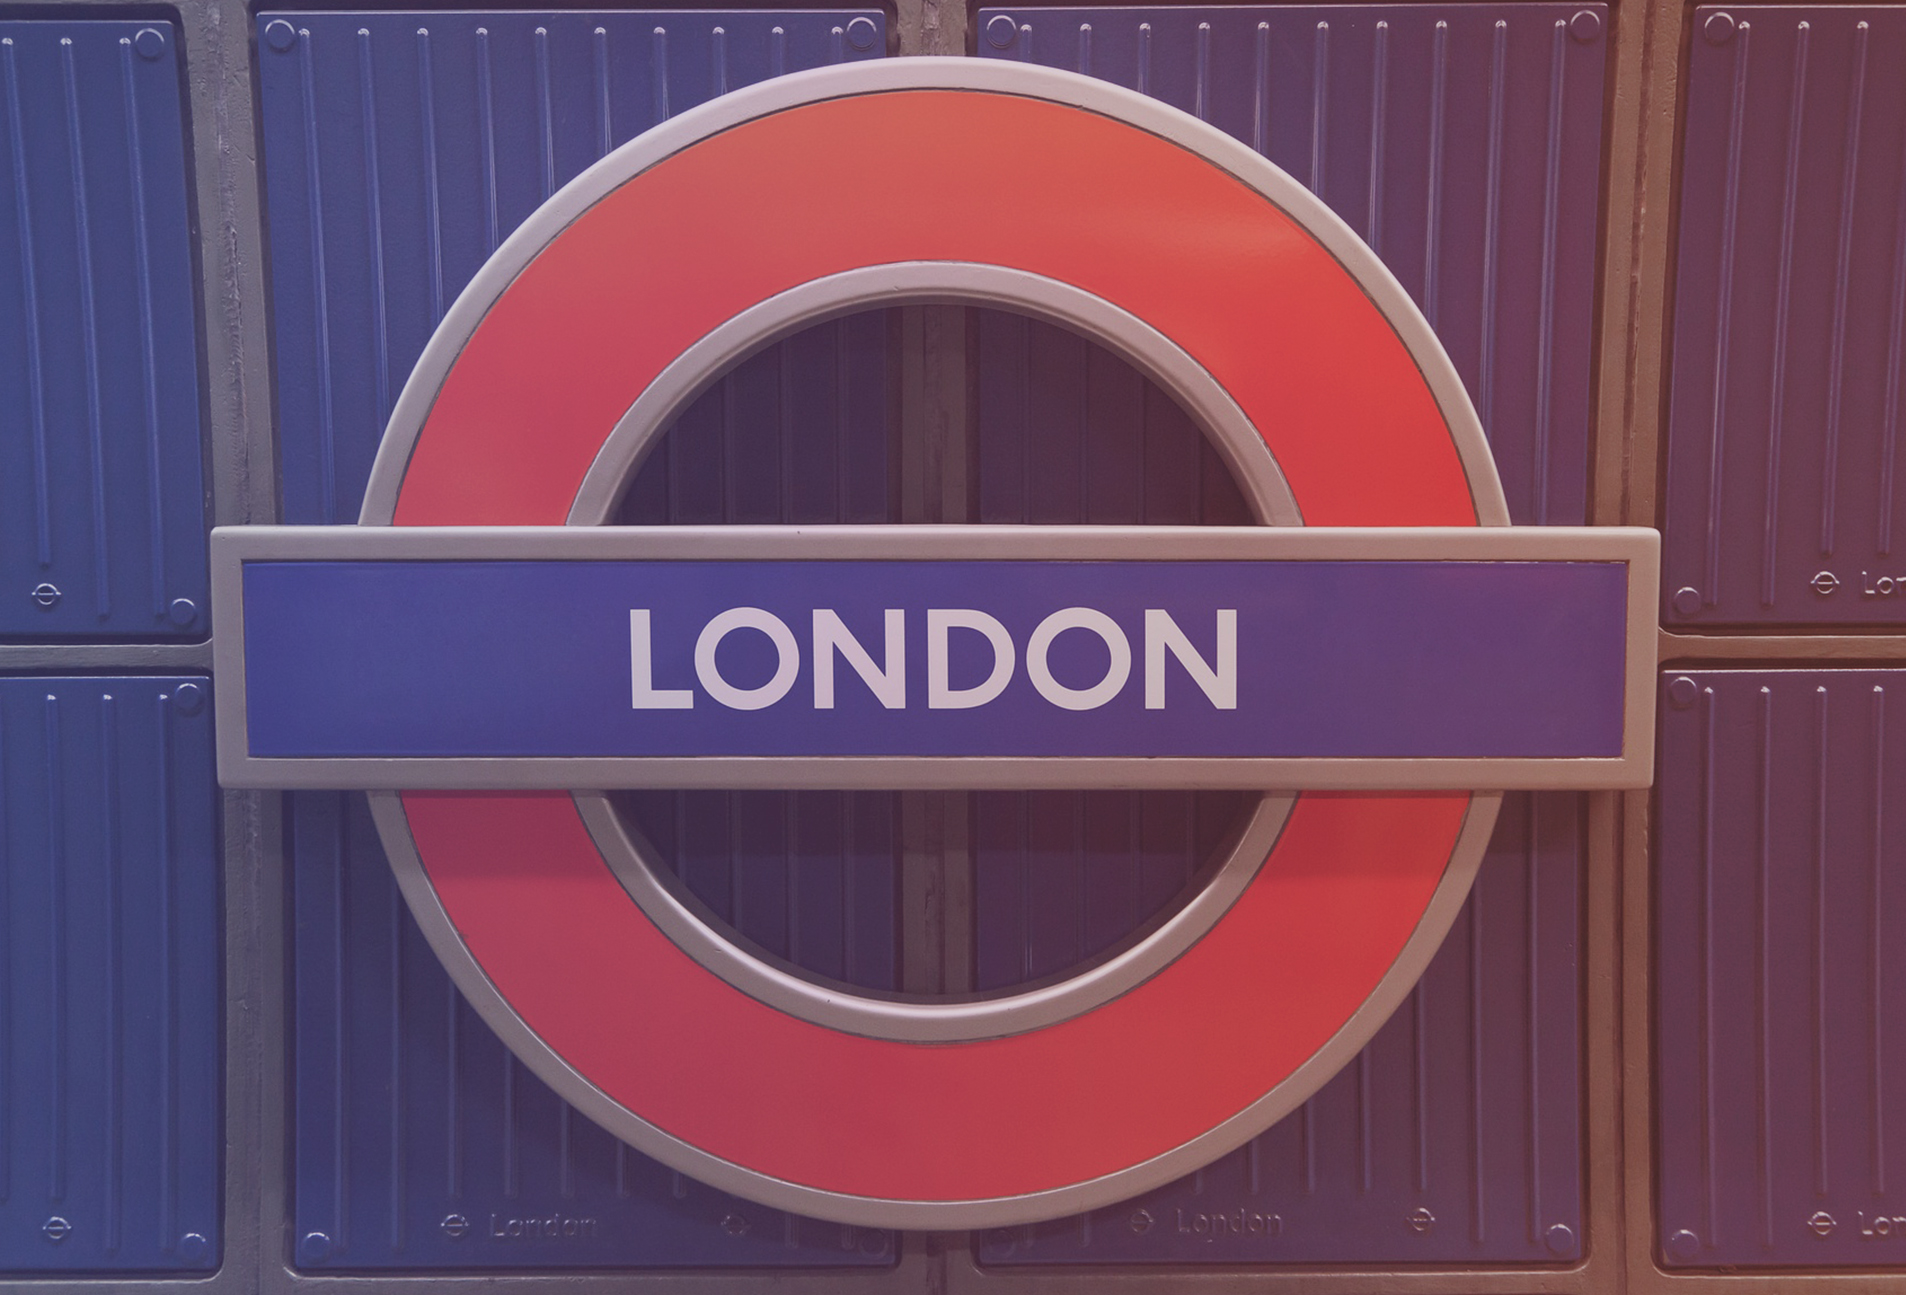 London Tube logo